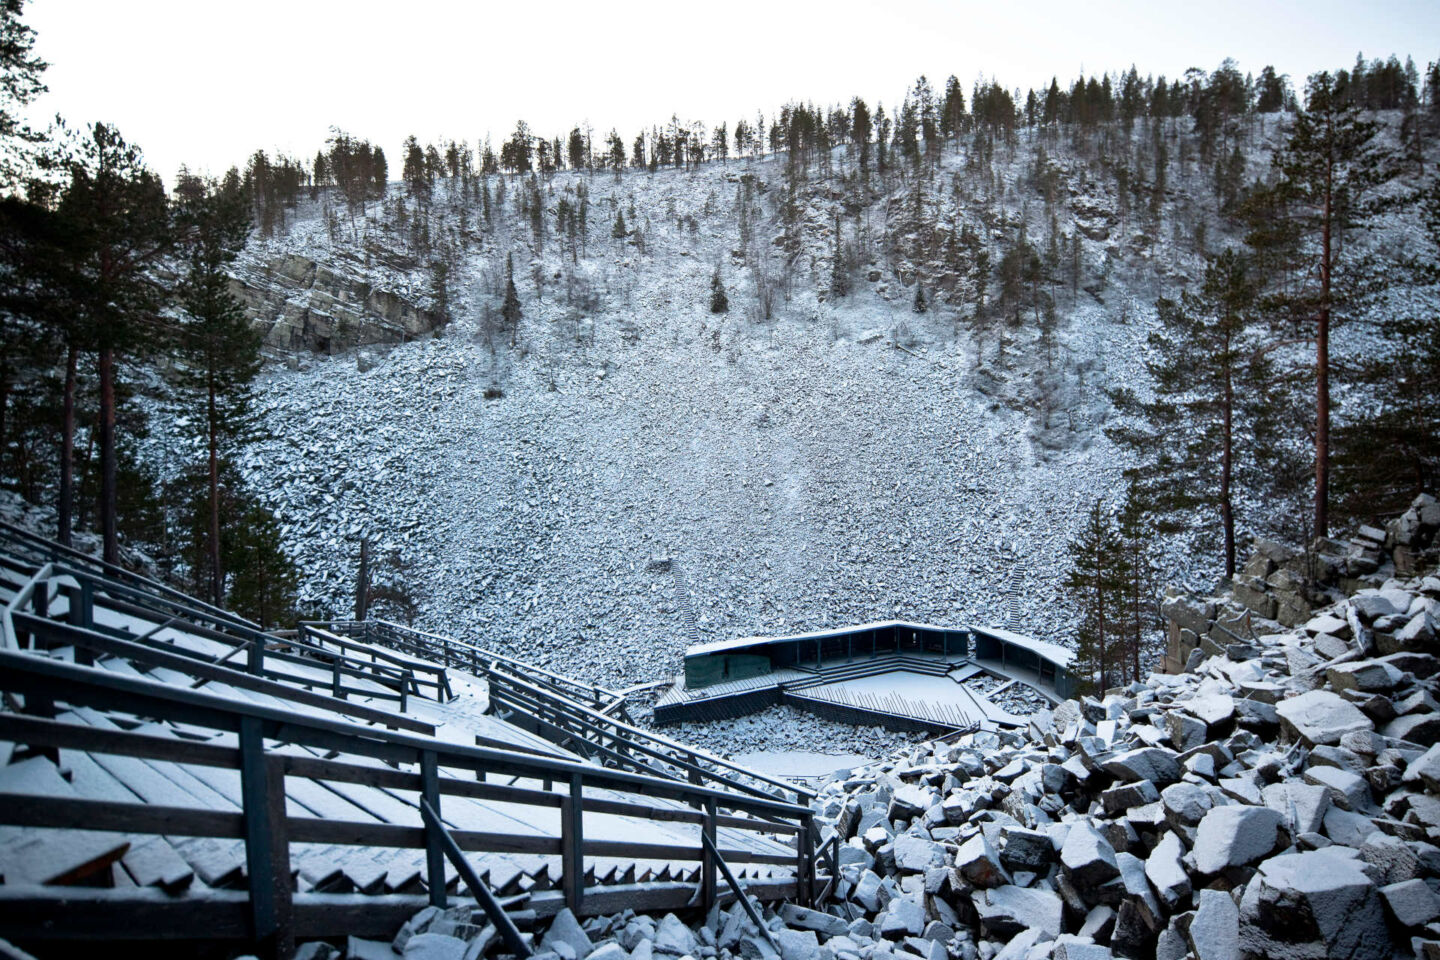 Rural amphitheater in Aittakuru gorge in Pyhä, Finland, a filming location in Finnish Lapland